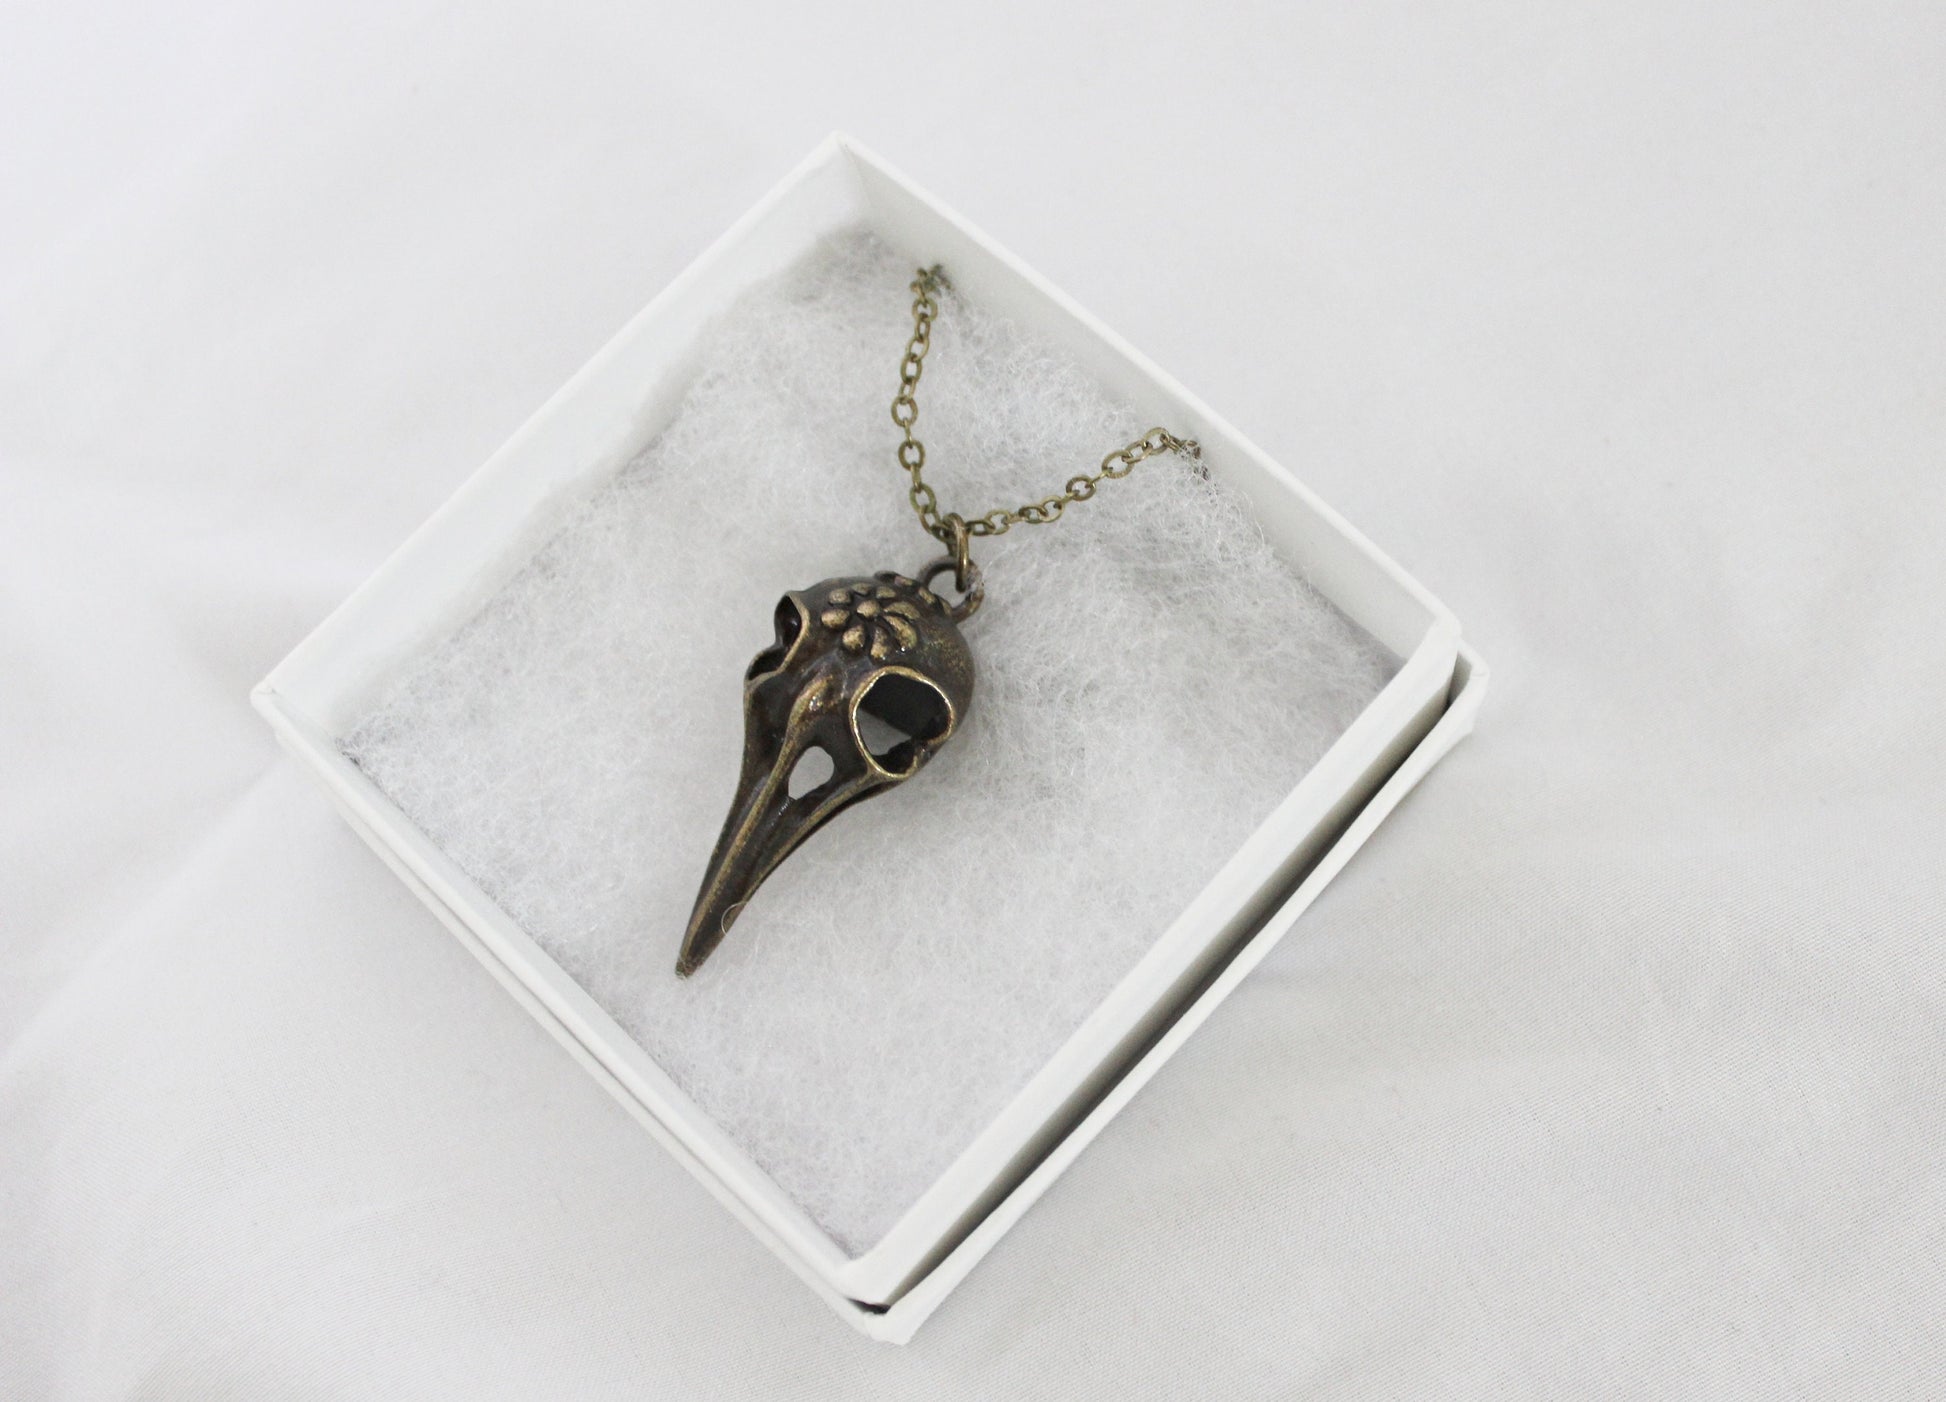 Raven Skull Necklace - Wildflower Moon Magic